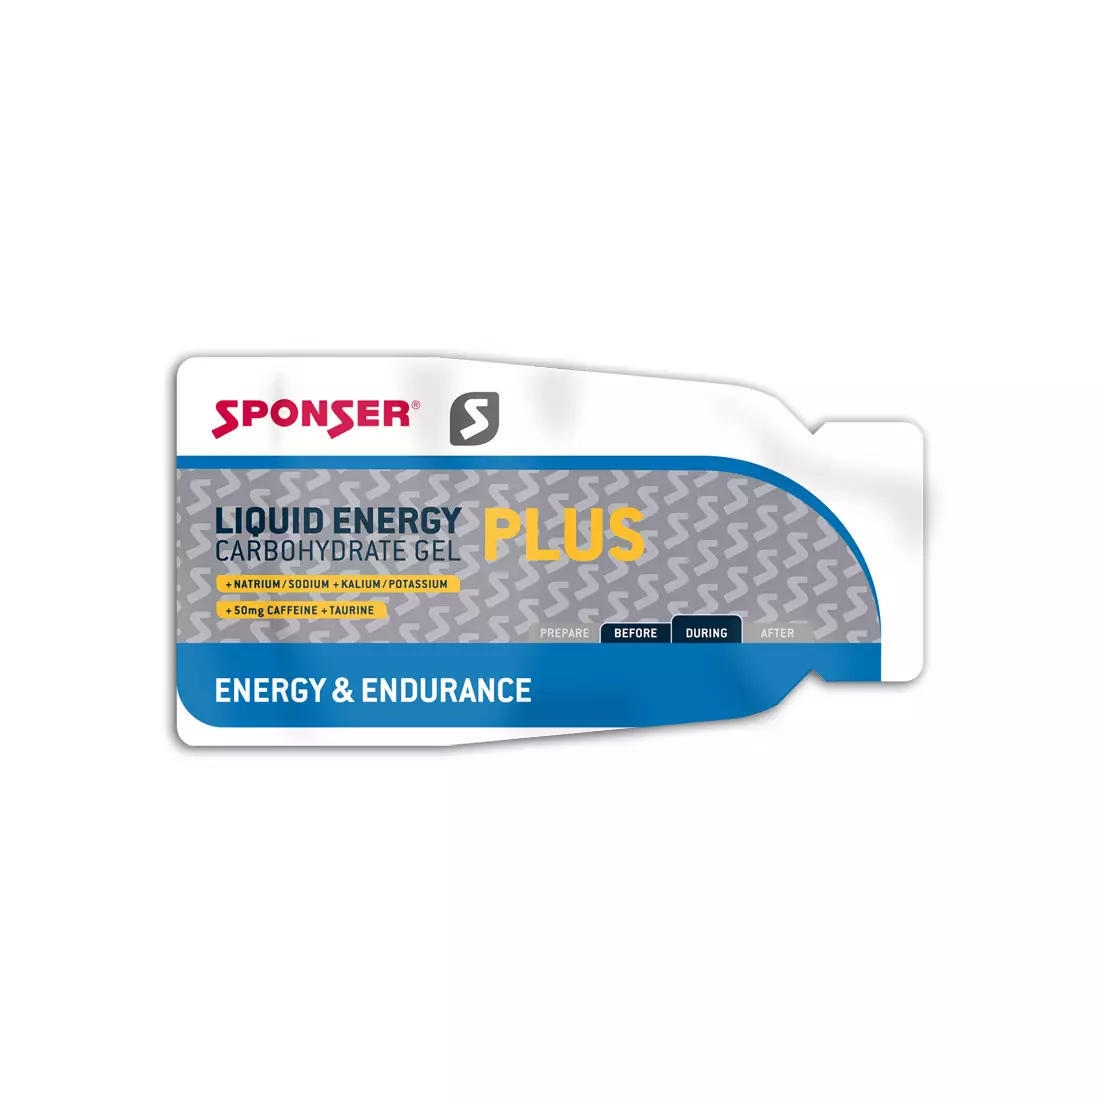 SPONSER LIQUID ENERGY PLUS Semleges energiagél koffeindobozzal (40 tasak x 35g)